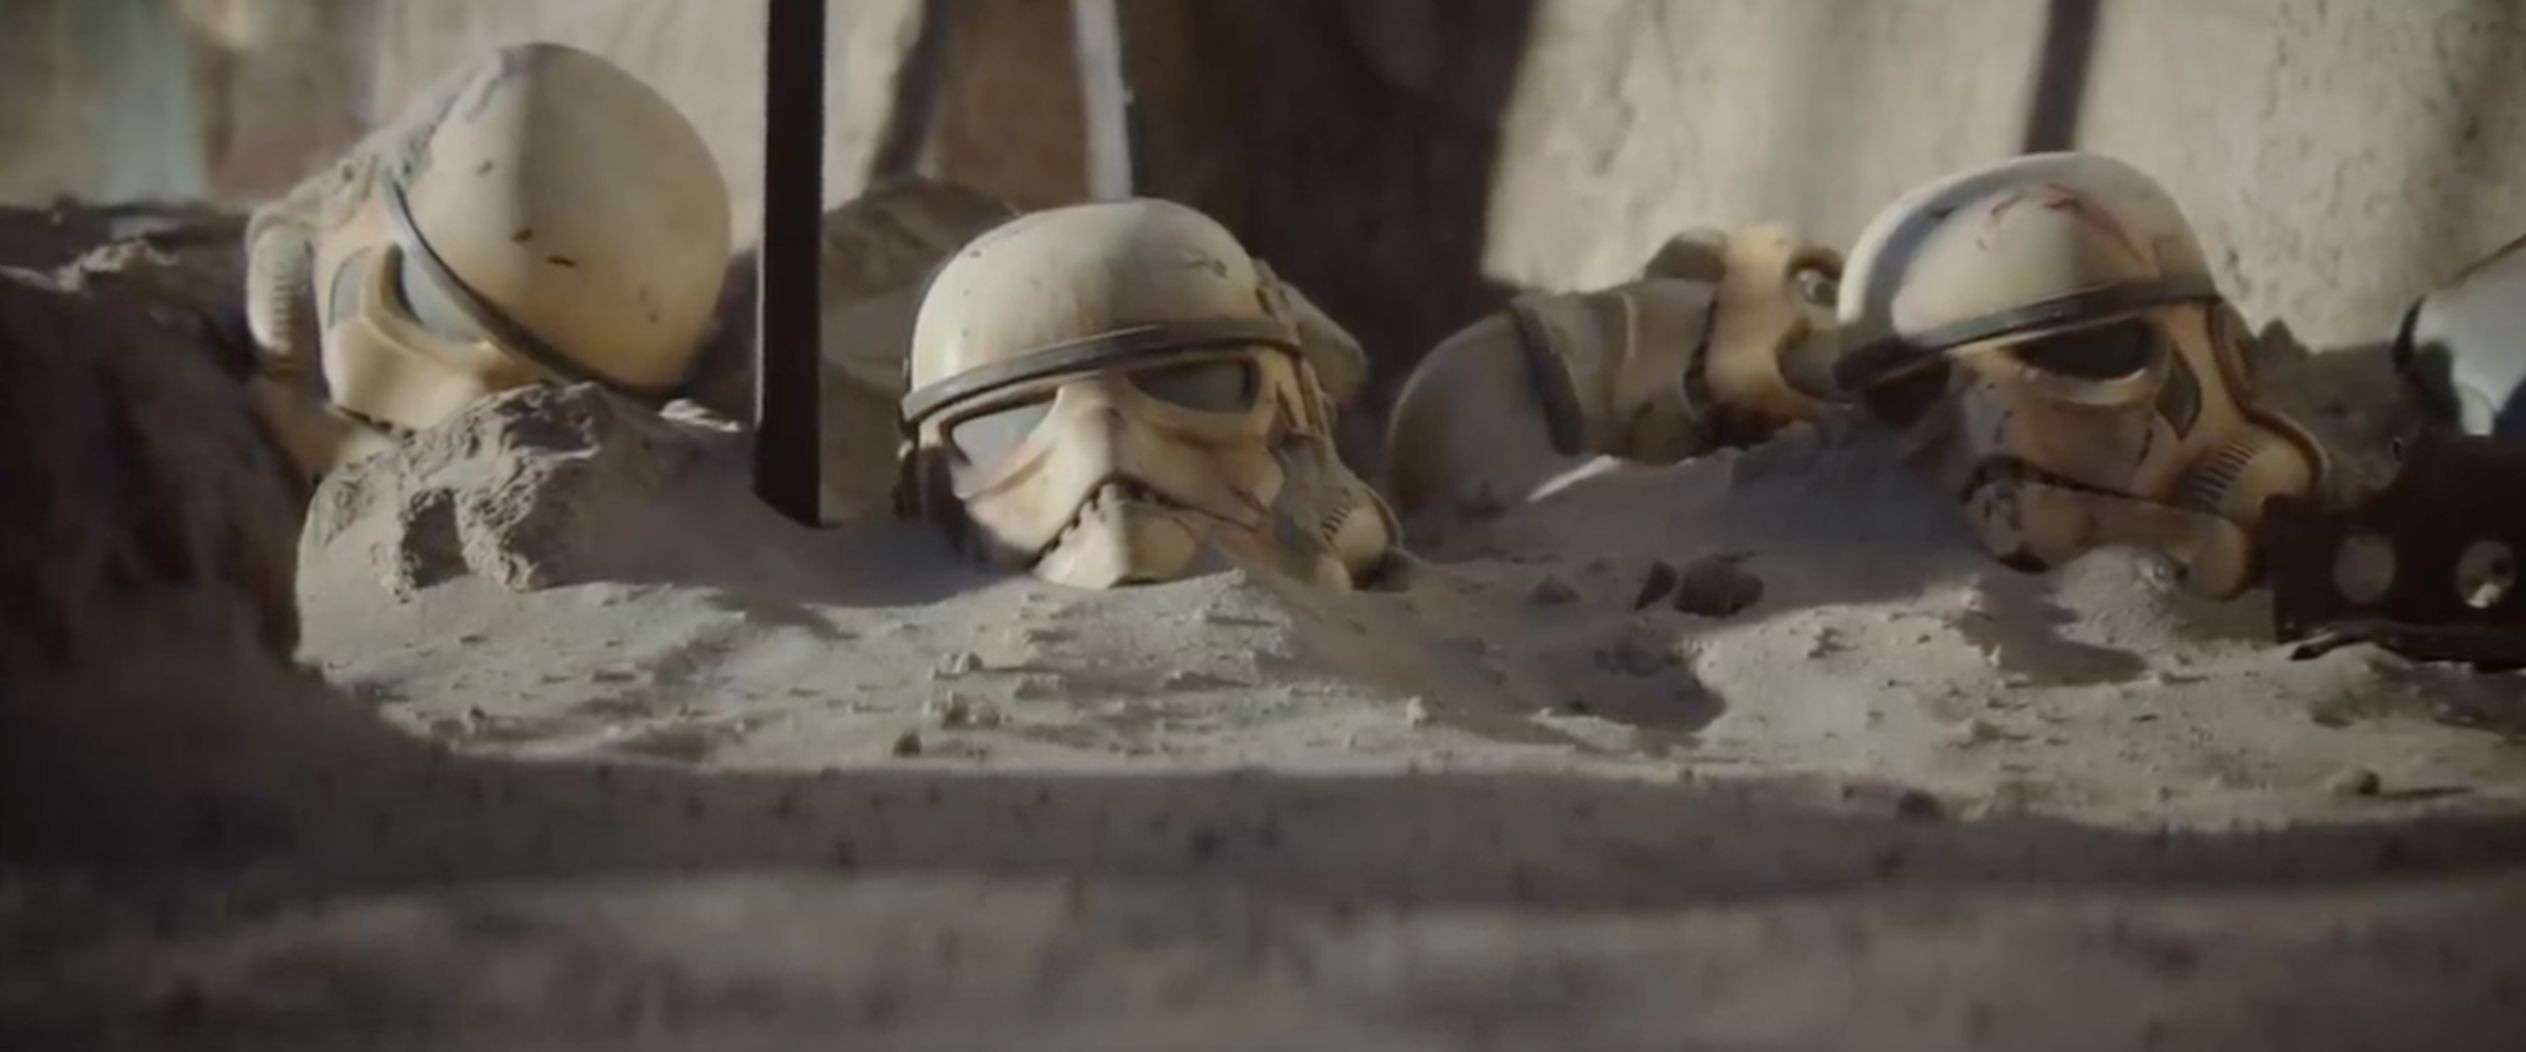 Stormtrooper helmets (The Mandalorian)